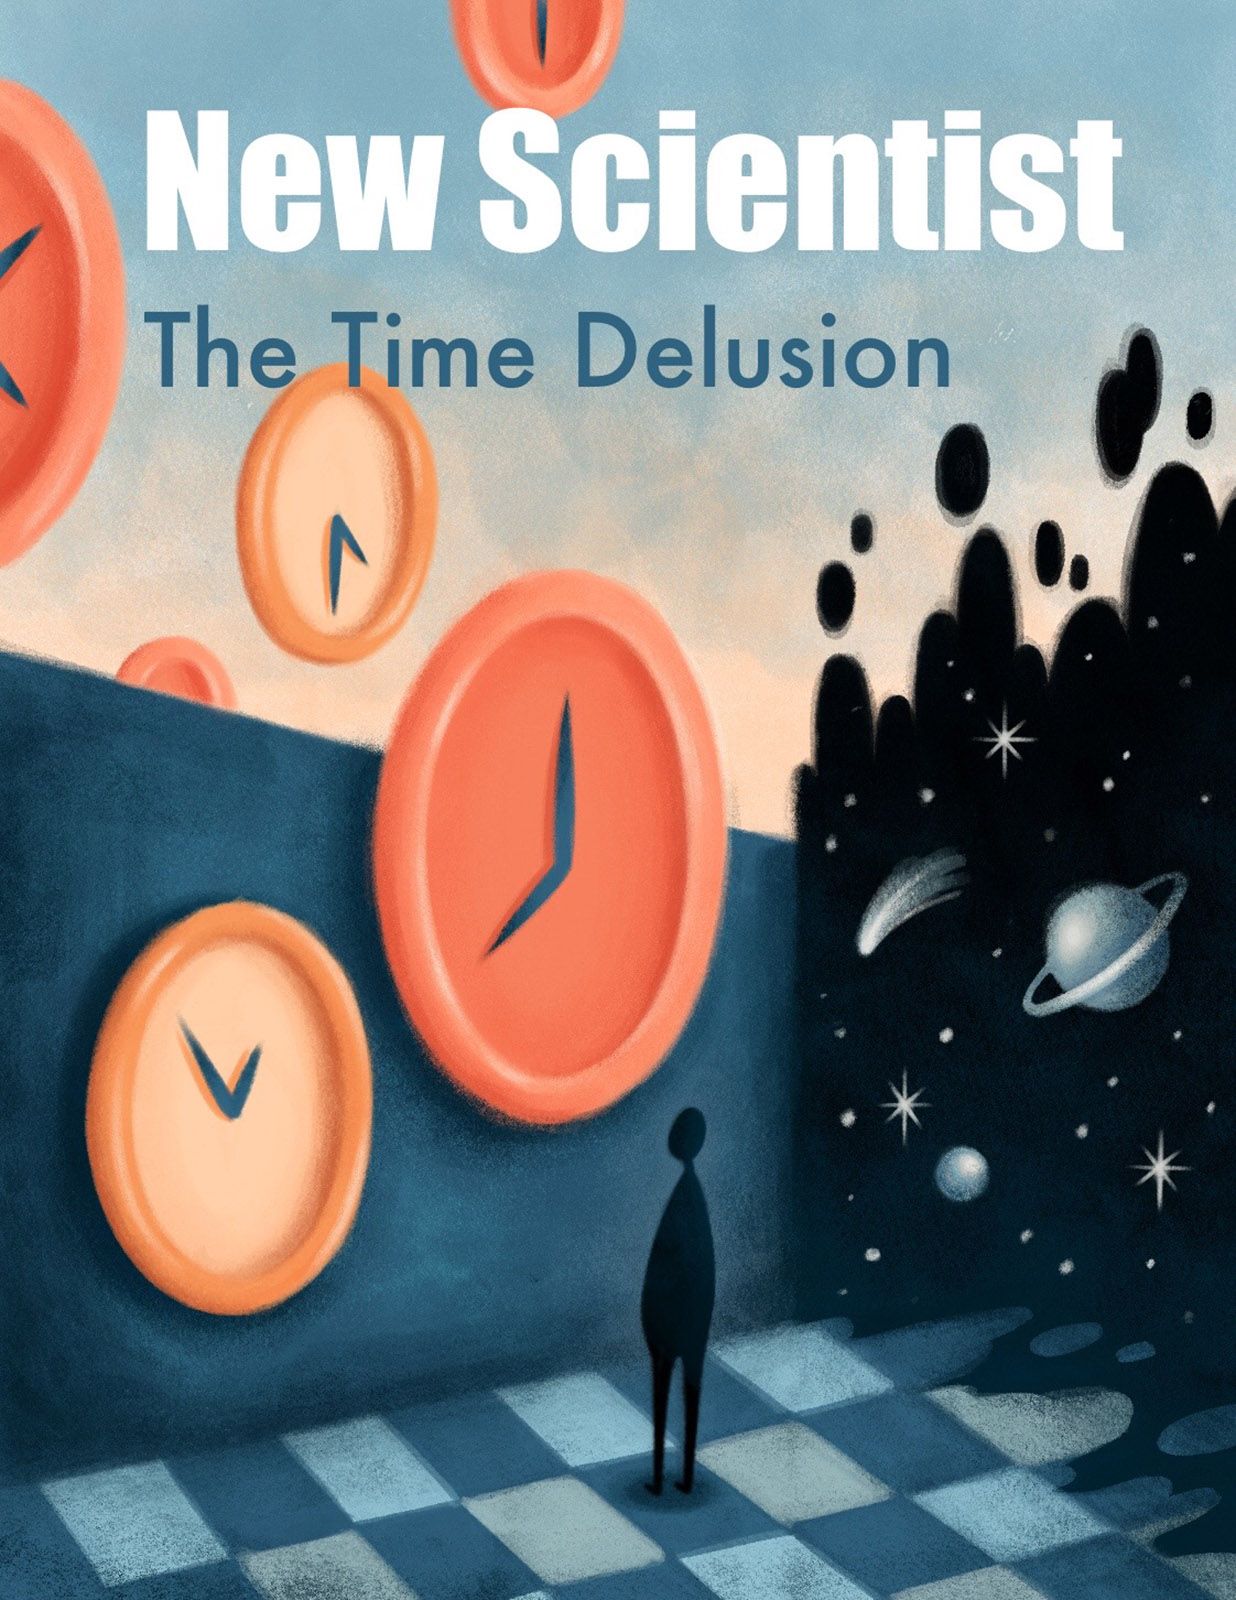 New Scientist - Time Delusion